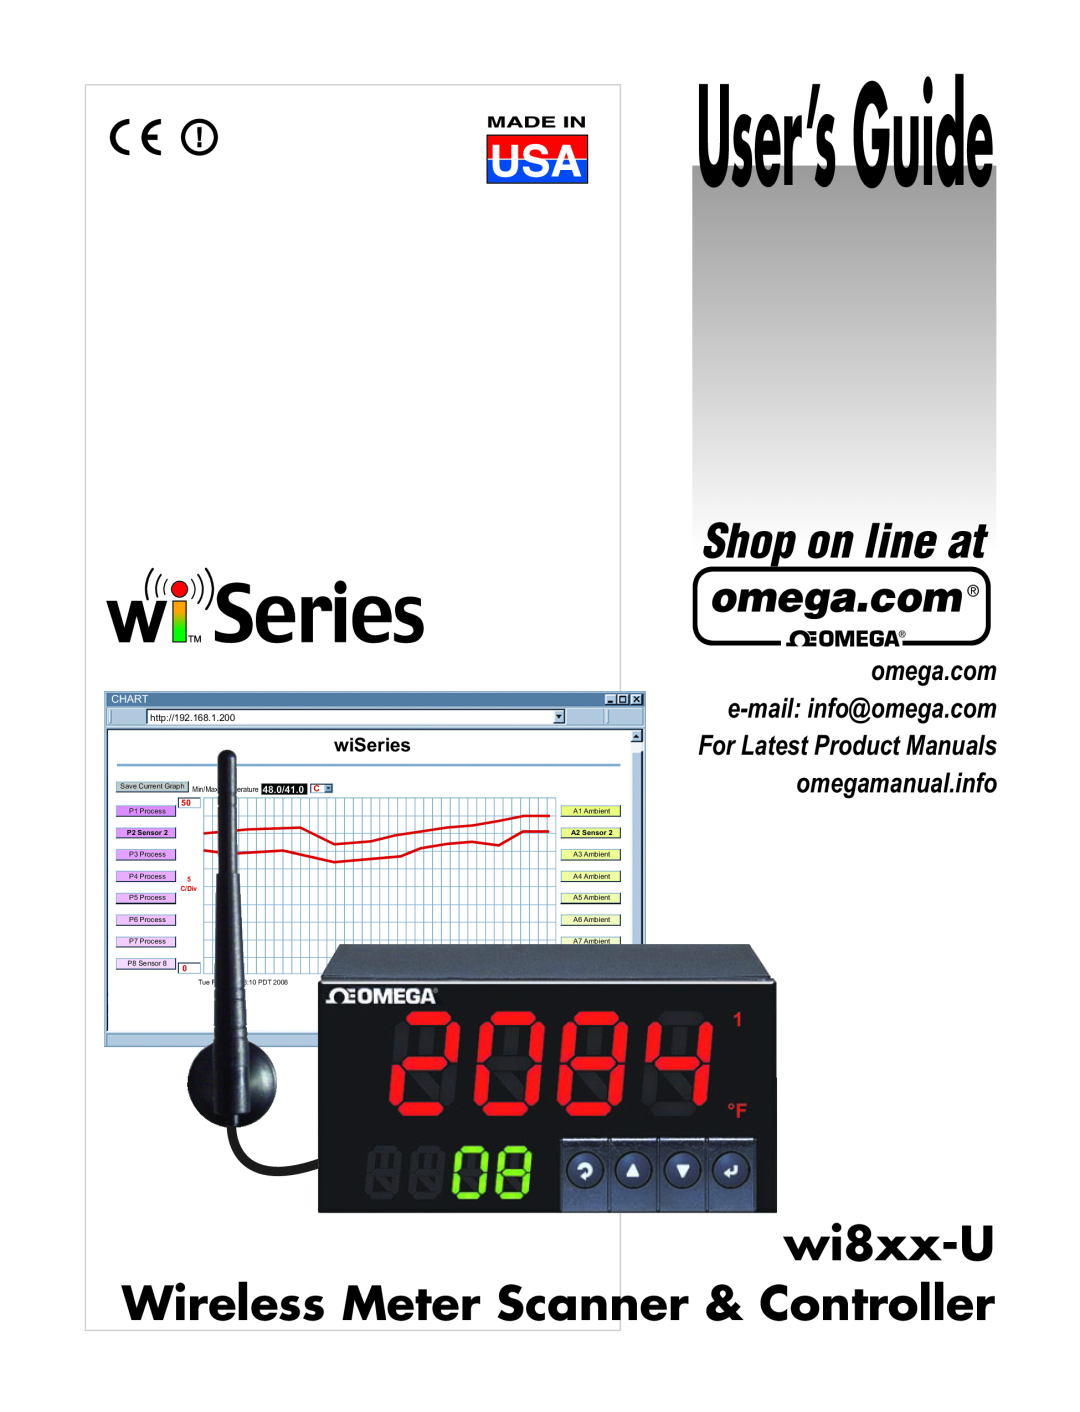 Omega WI8XX-U manual User’sGuide, Wireless Meter Scanner, Shop on line at, wi8xx-U & Controller, wiSeries, P2 Sensor 